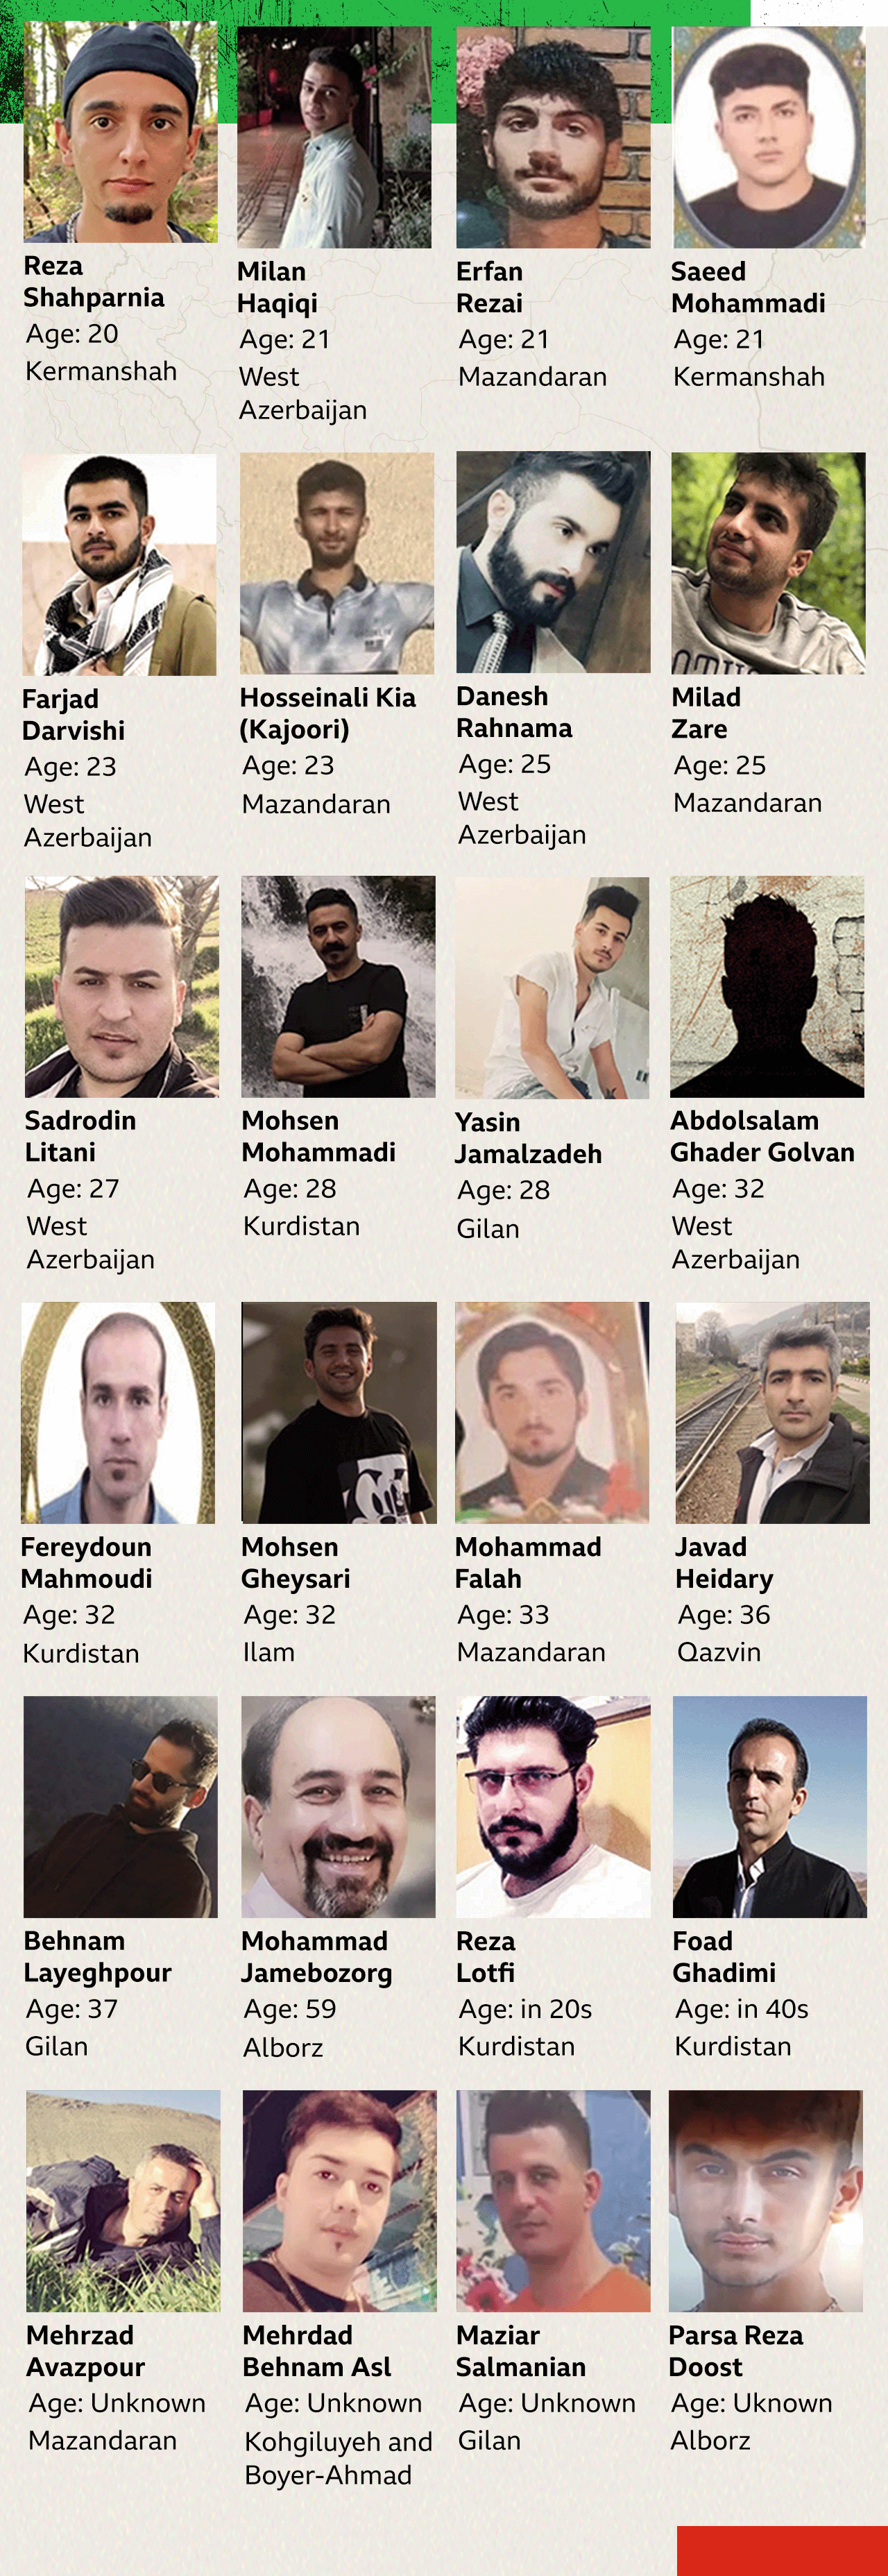 Victims identified: Milan Haqiqi, Farjad Darvishi, Danesh Rahnama, Sadrodin Litani, Abdolsalam Ghader Golvan, Javad Heidary, Erfan Rezai, Hosseinali Kia (Kajoori), Milad Zare, Mohammad Falah, Mehrzad Avazpour, Fereydoun Mahmoudi, Mohsen Mohammadi, Reza Lotfi, Foad Ghadimi, Mehrdad Behnam Asl, Reza Shahparnia, Saeed Mohammadi, Mohsen Gheysari, Yasin Jamalzadeh, Behnam Layeghpour, Maziar Salmanian, Parsa Reza Doost, Mohammad Jamebozorg